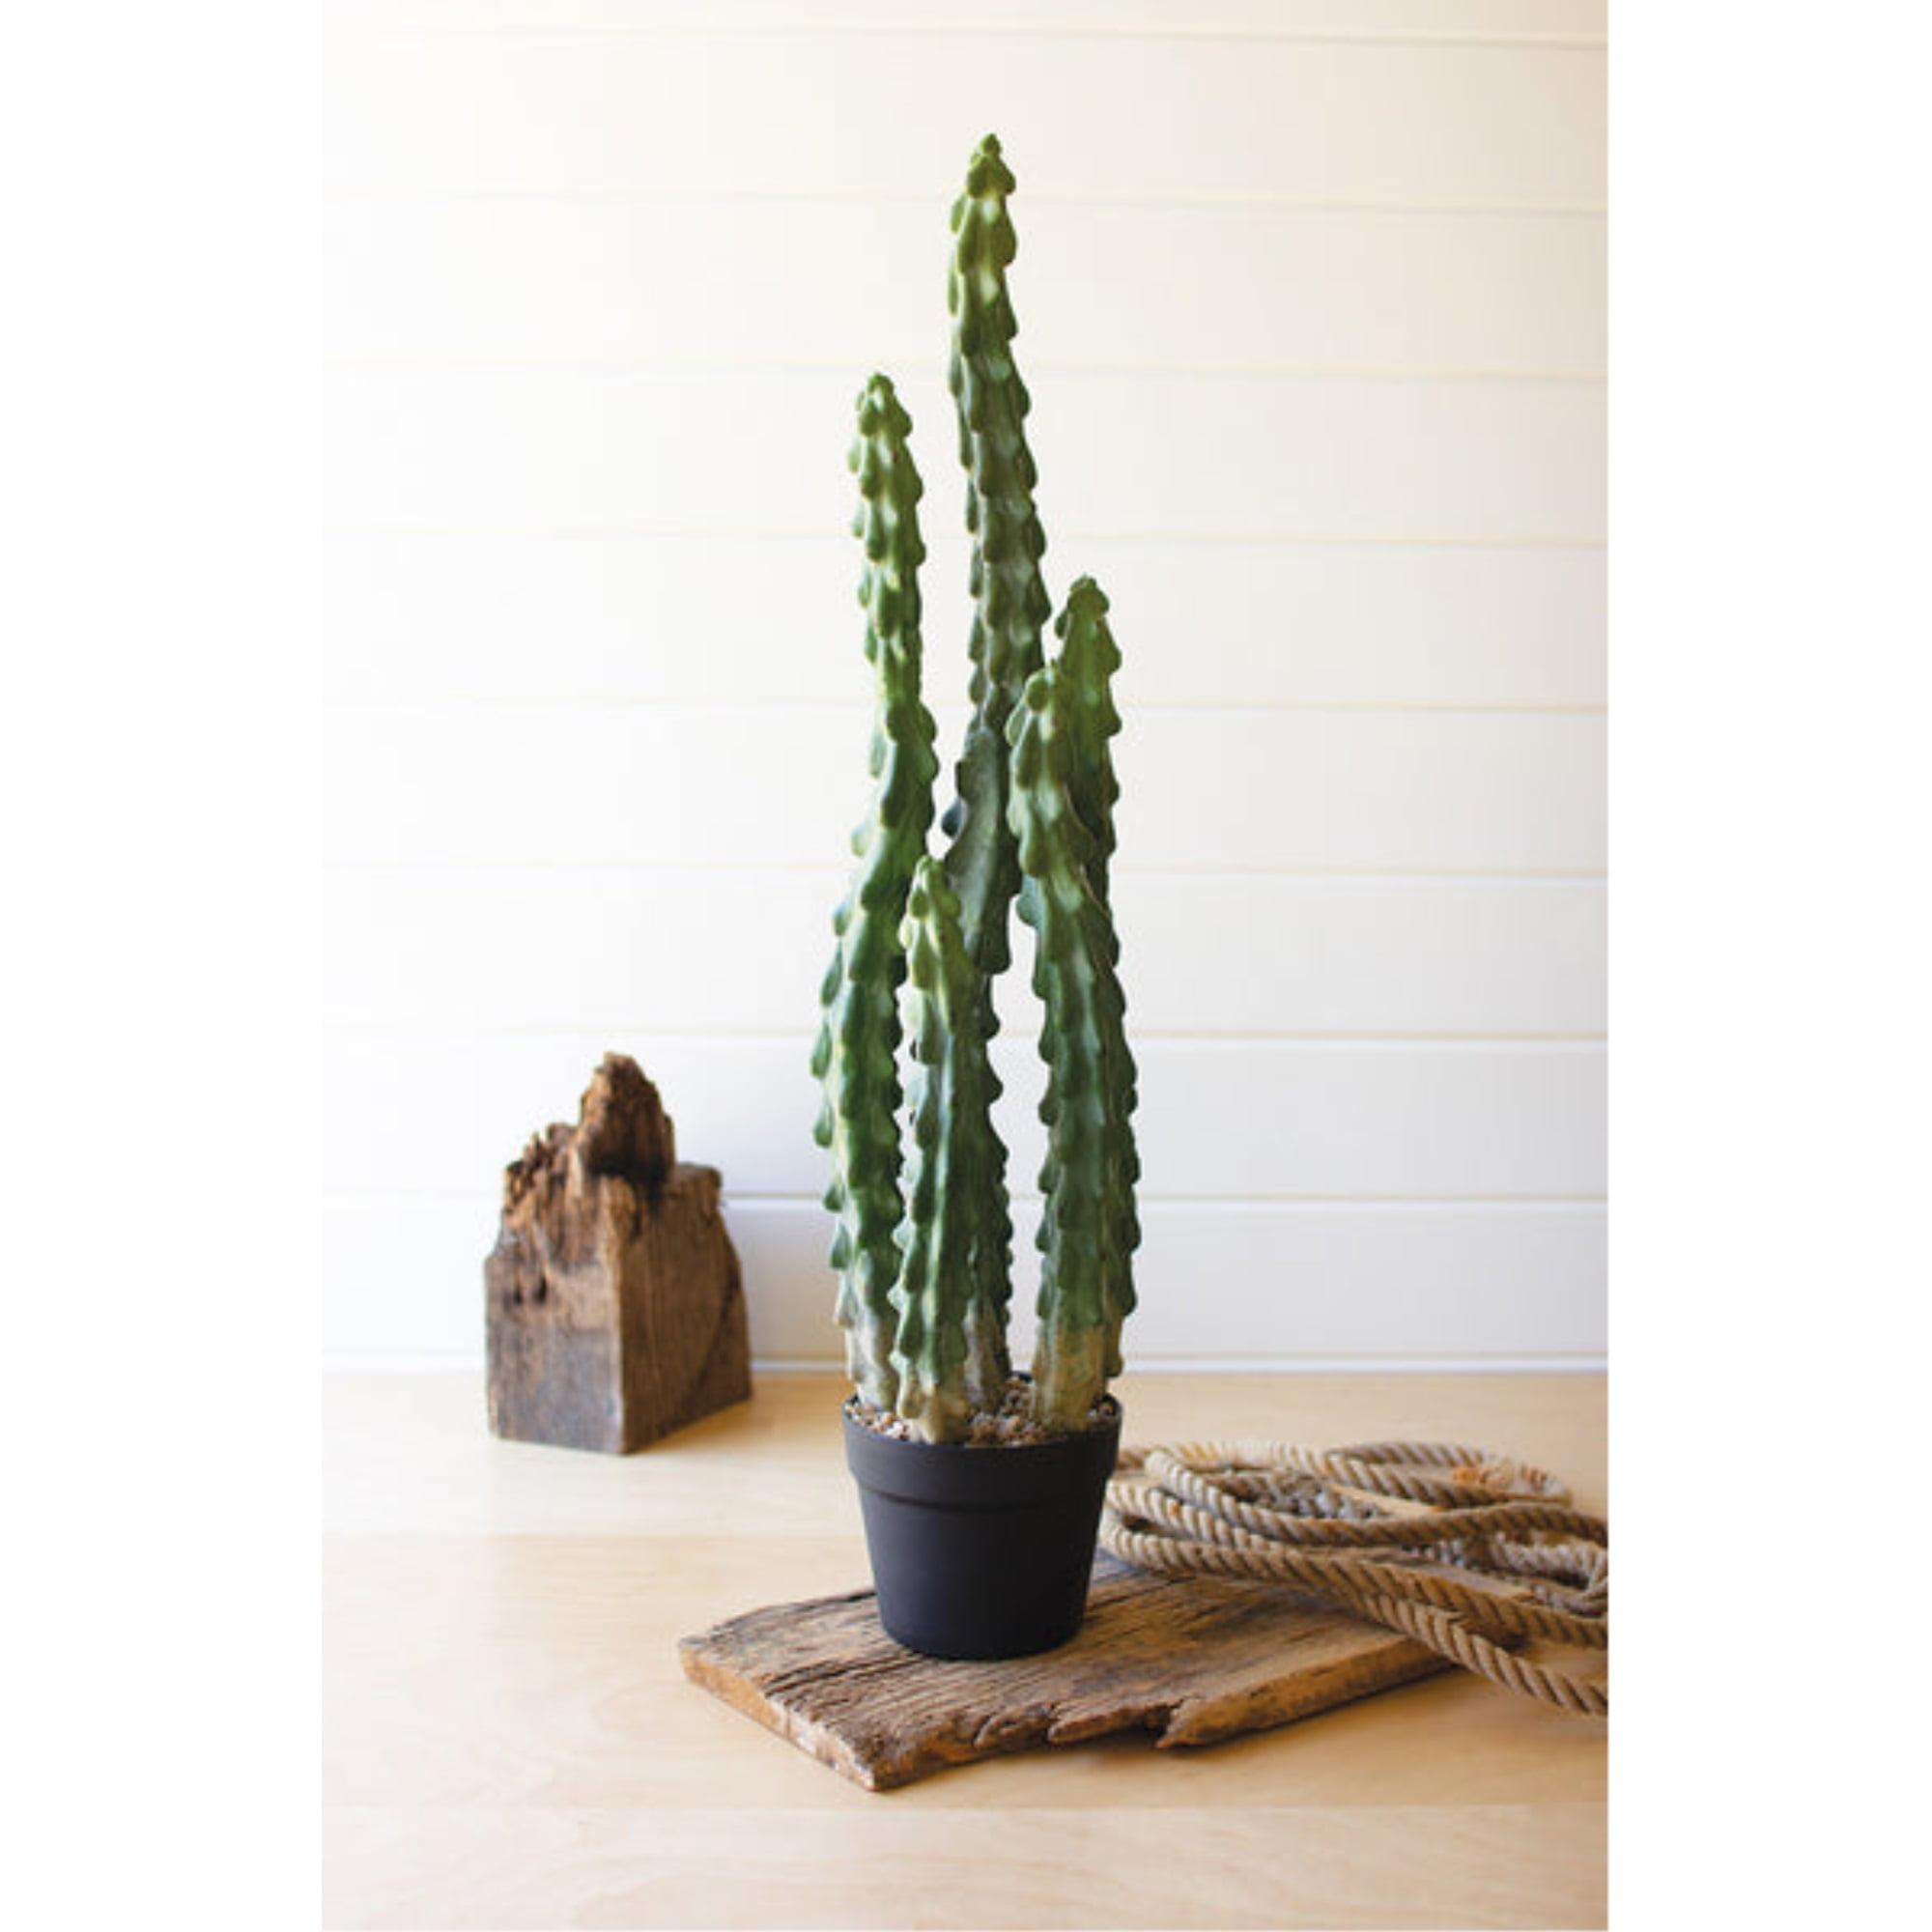 Tall Six-Stemmed Green Cactus in Black Plastic Pot